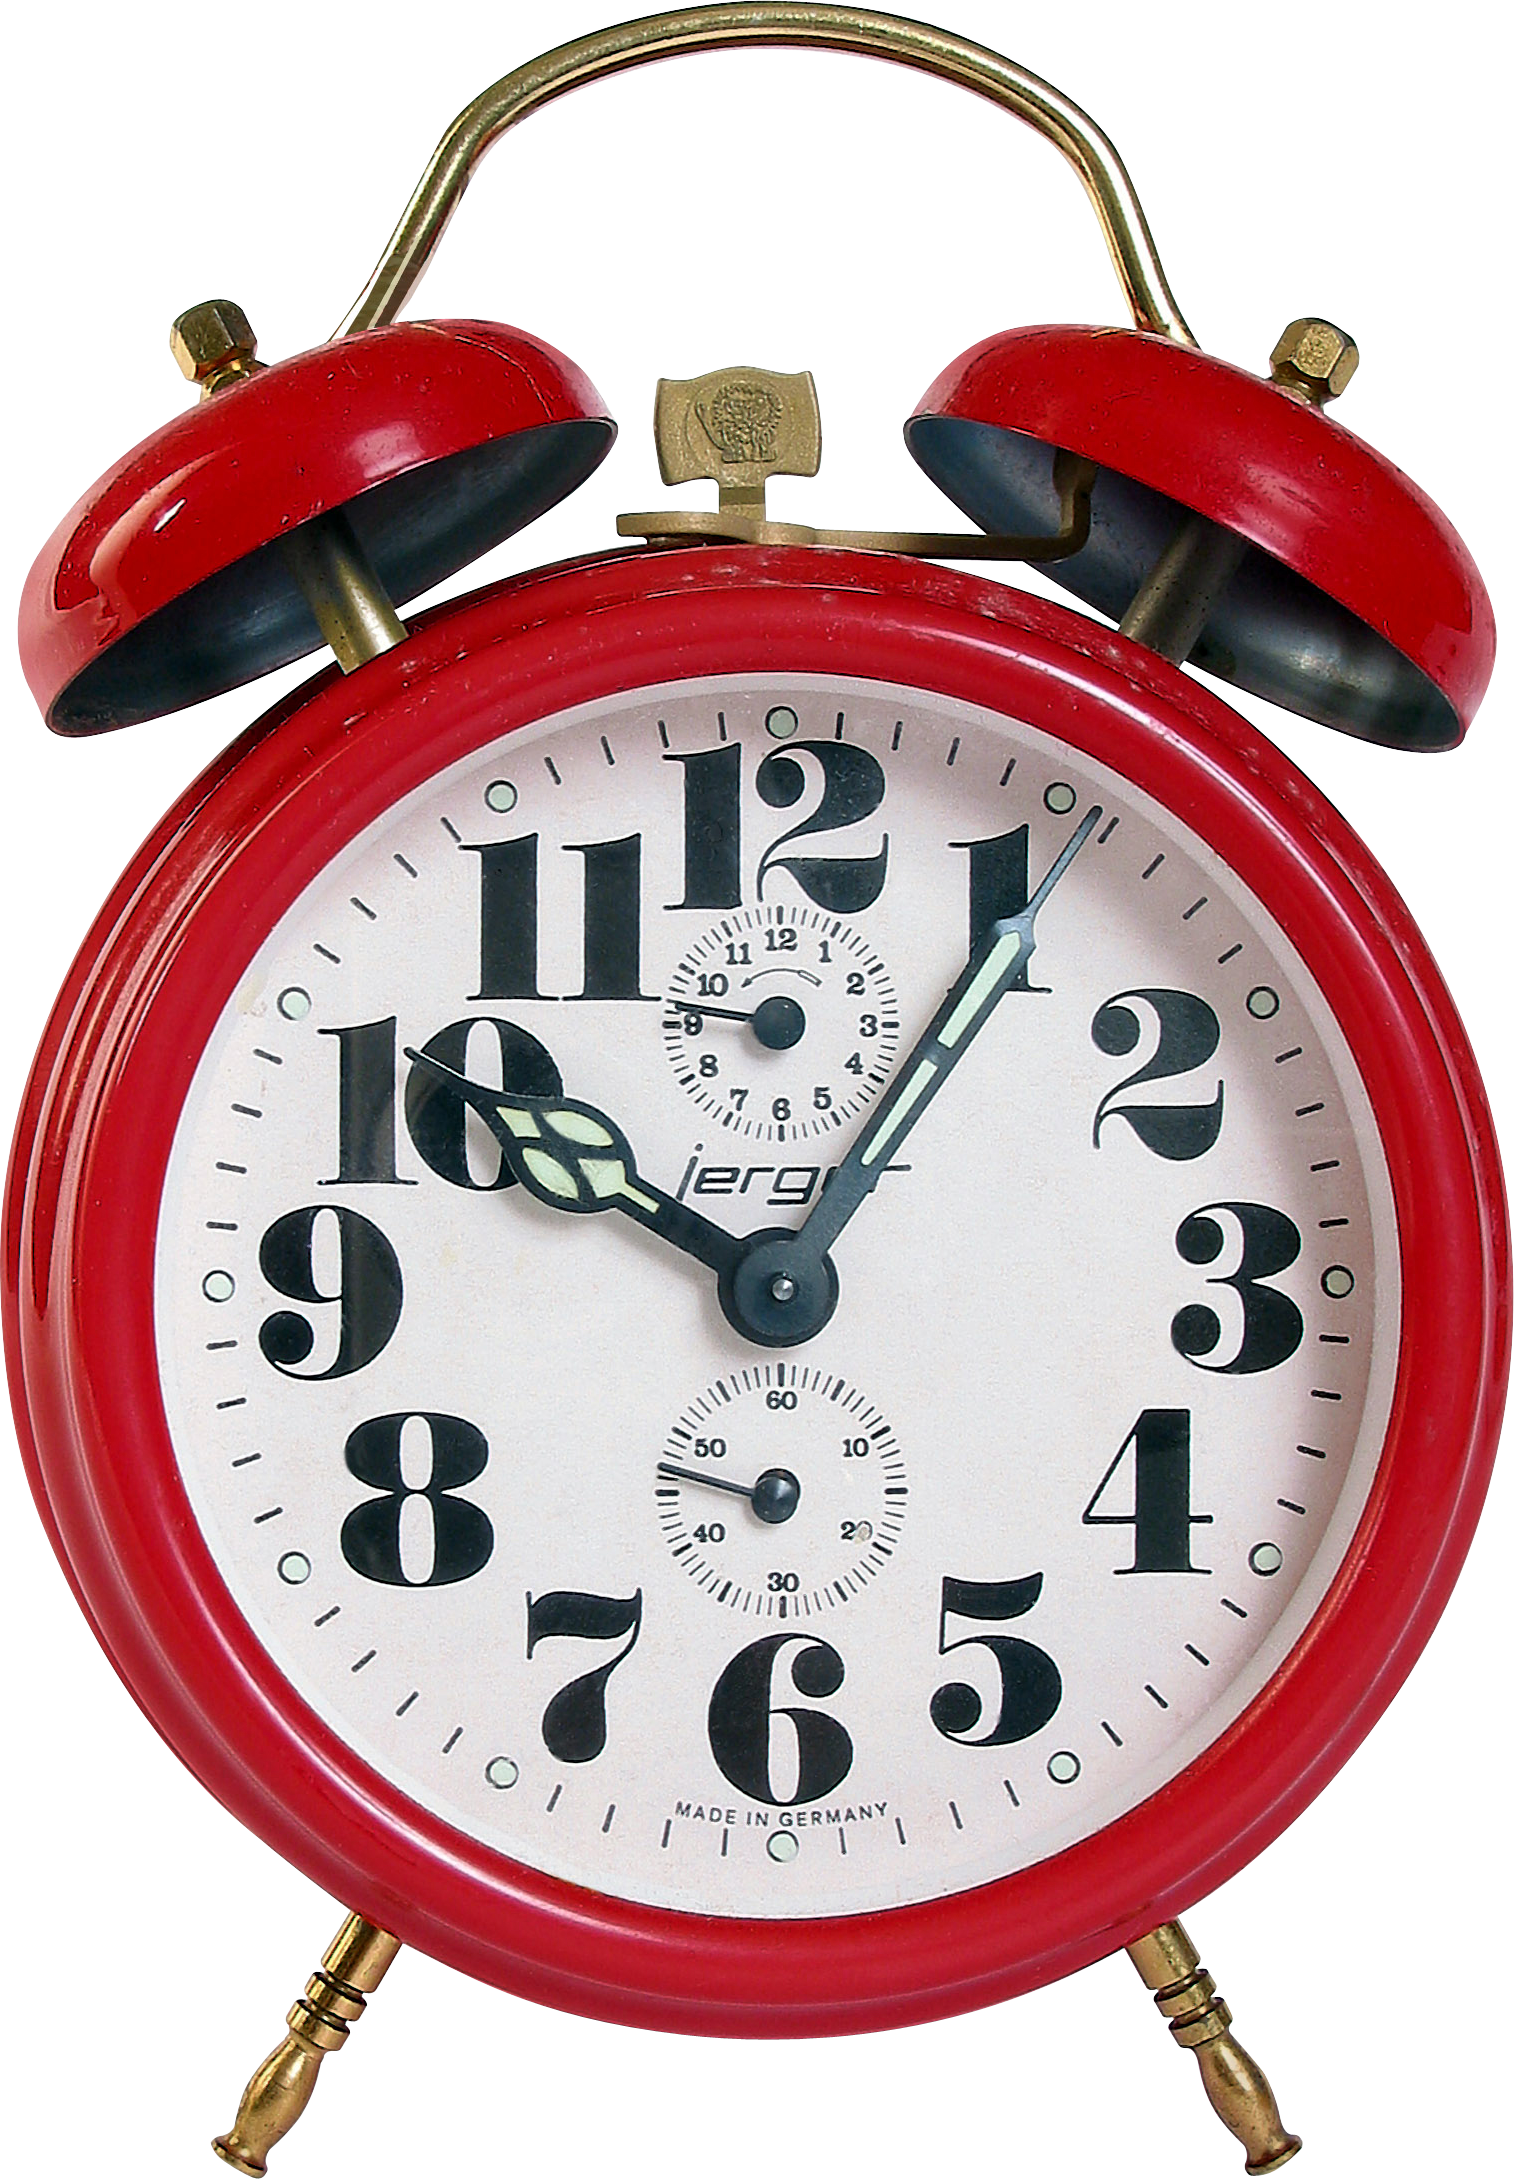 Red Alarm Clock PNG Image - PurePNG | Free transparent CC0 ...